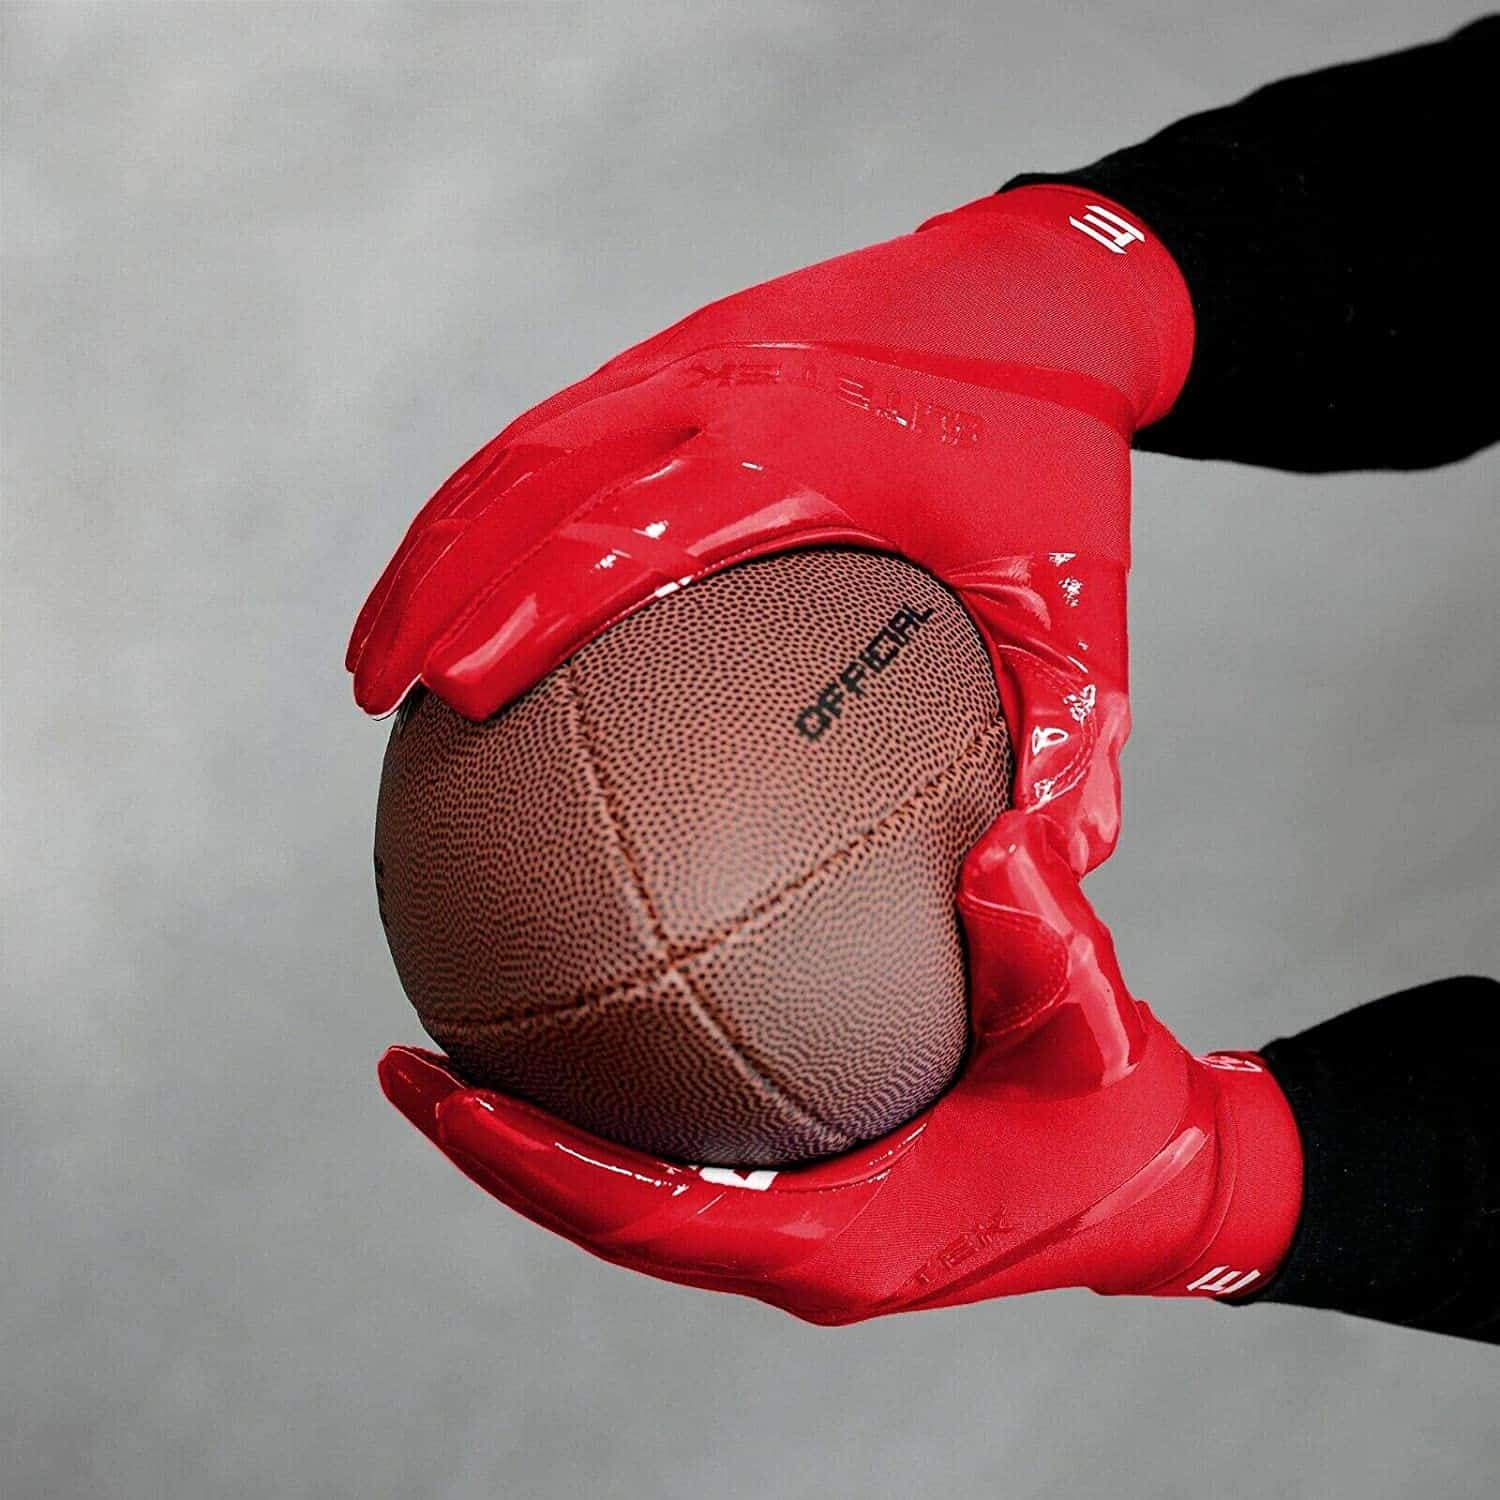 Beste personaliseerbare American Football handschoenen- EliteTek RG-14 Super Tight Fitting Football Gloves met de bal